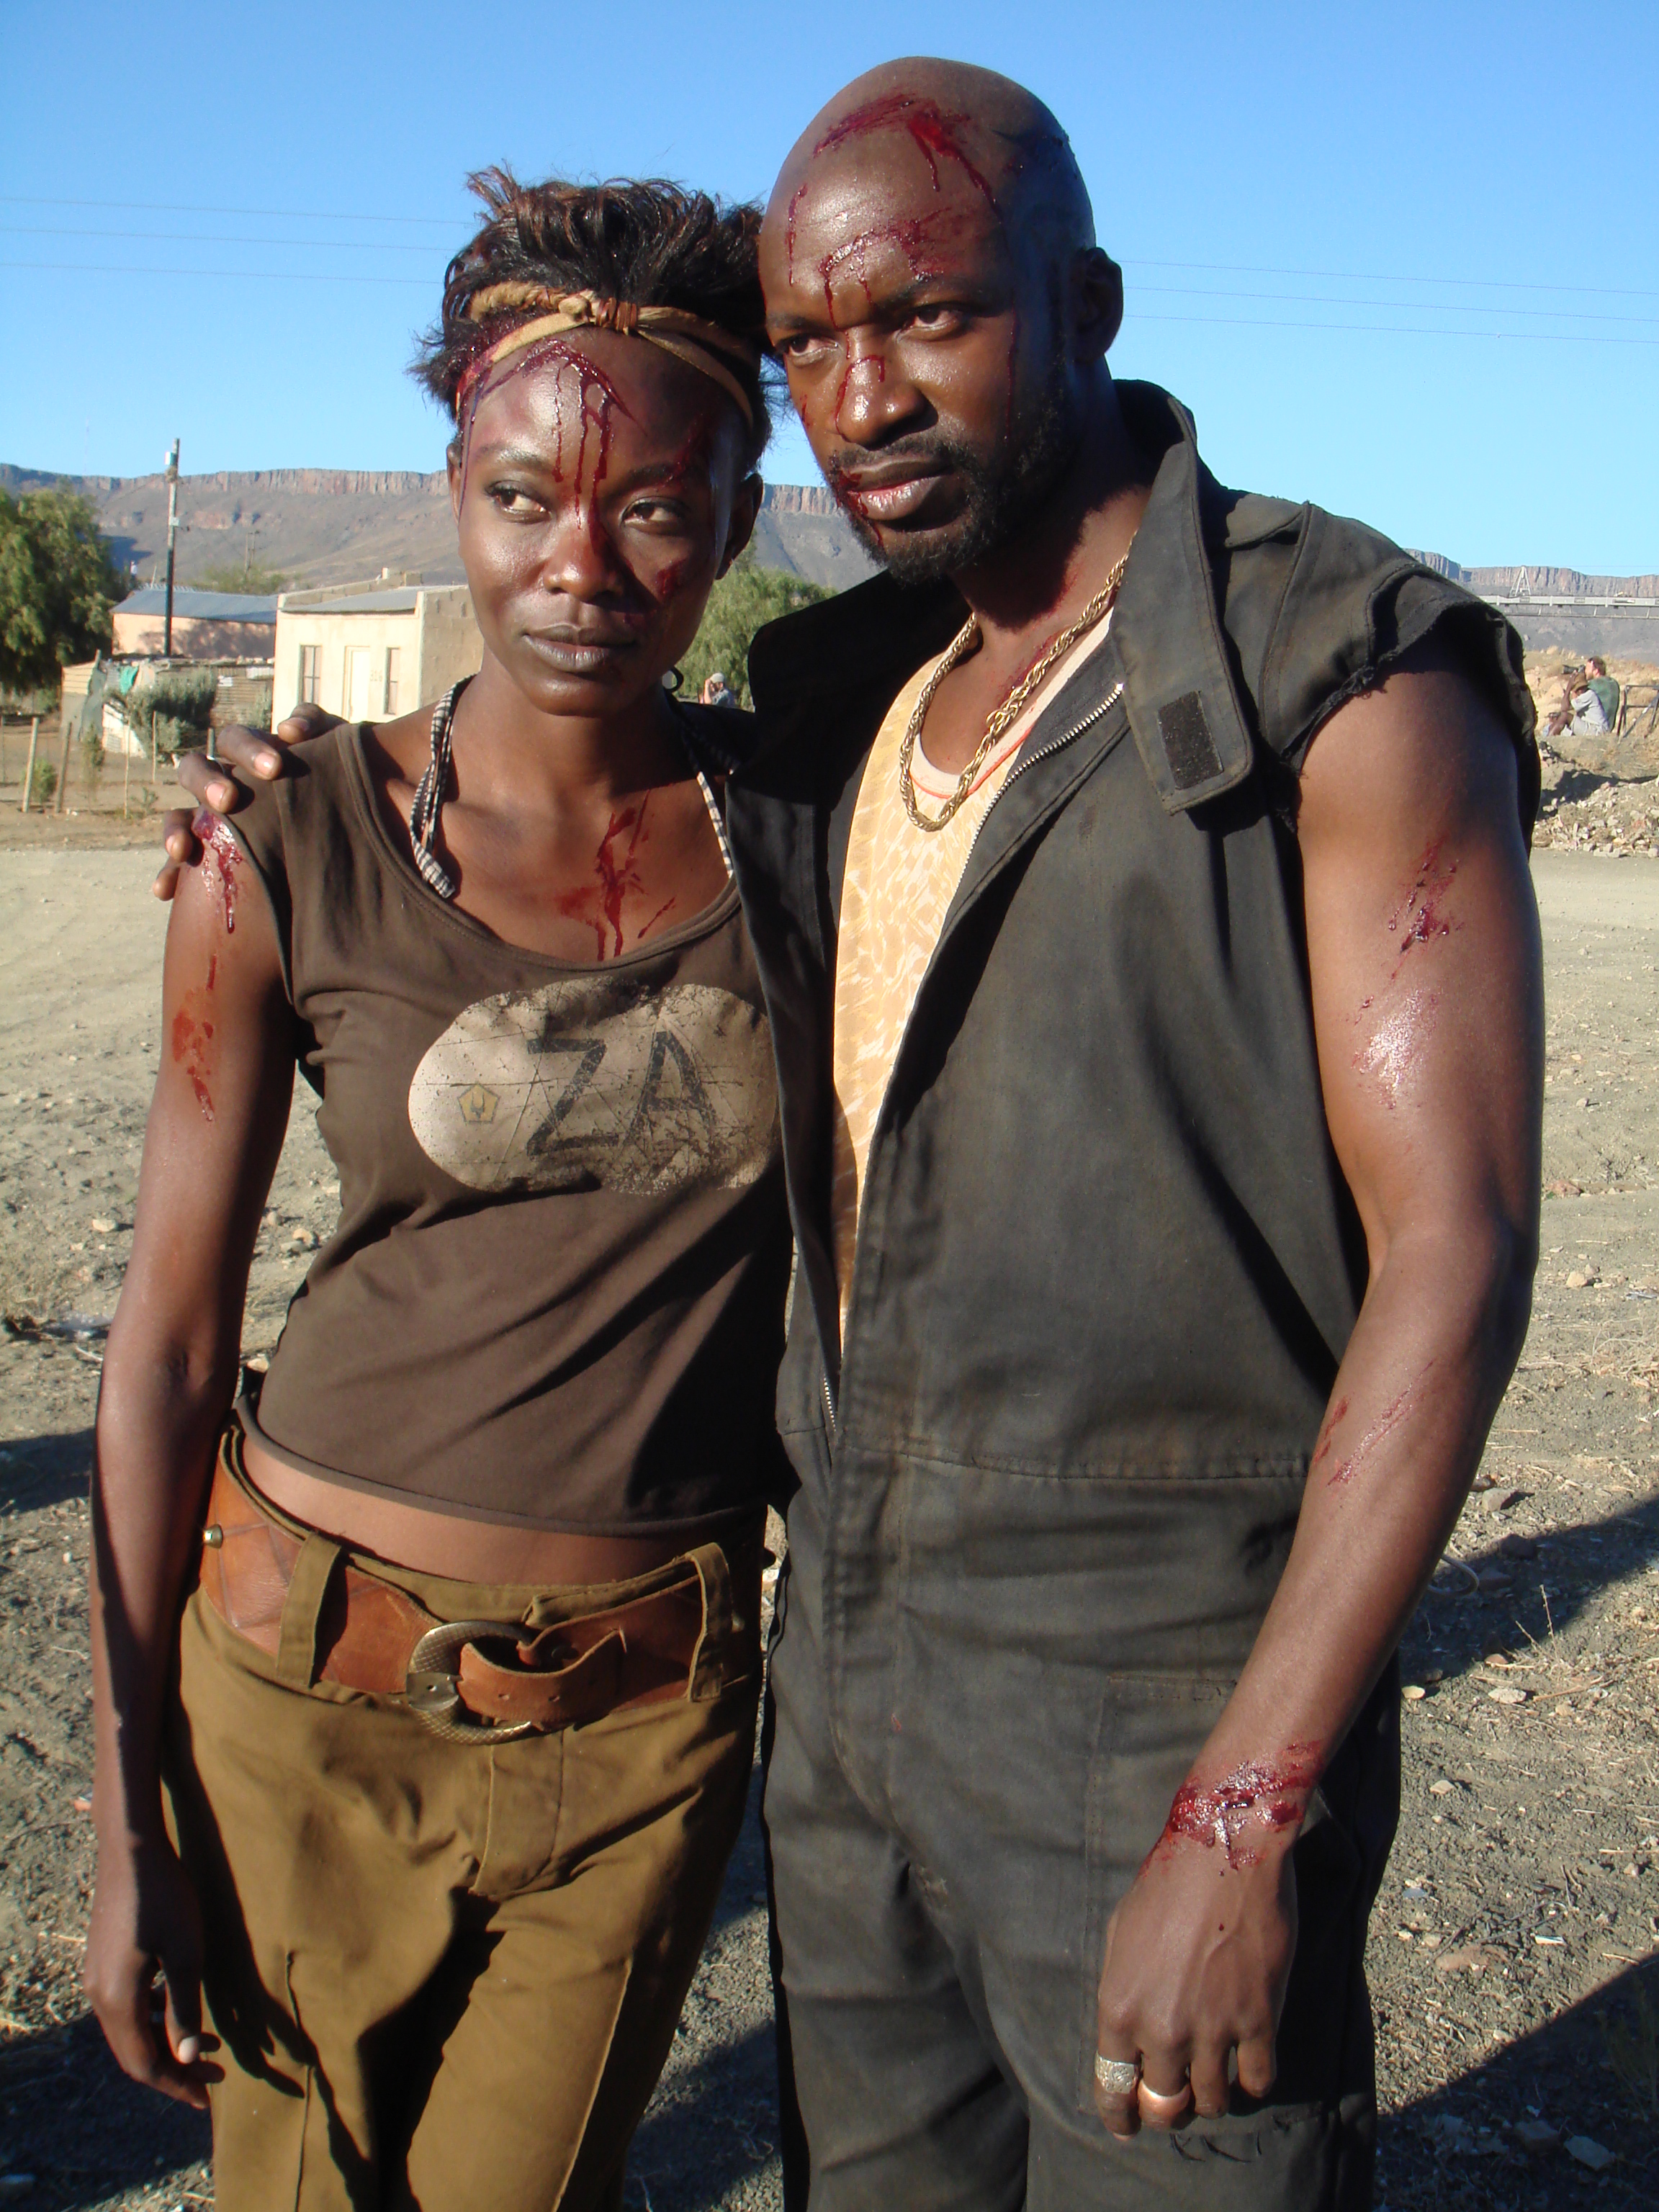 Eugene khumbanyiwa as Nero and Ebby Weyime as Maria on Death race 3 set. Cape town, South Africa. Nov 2011.